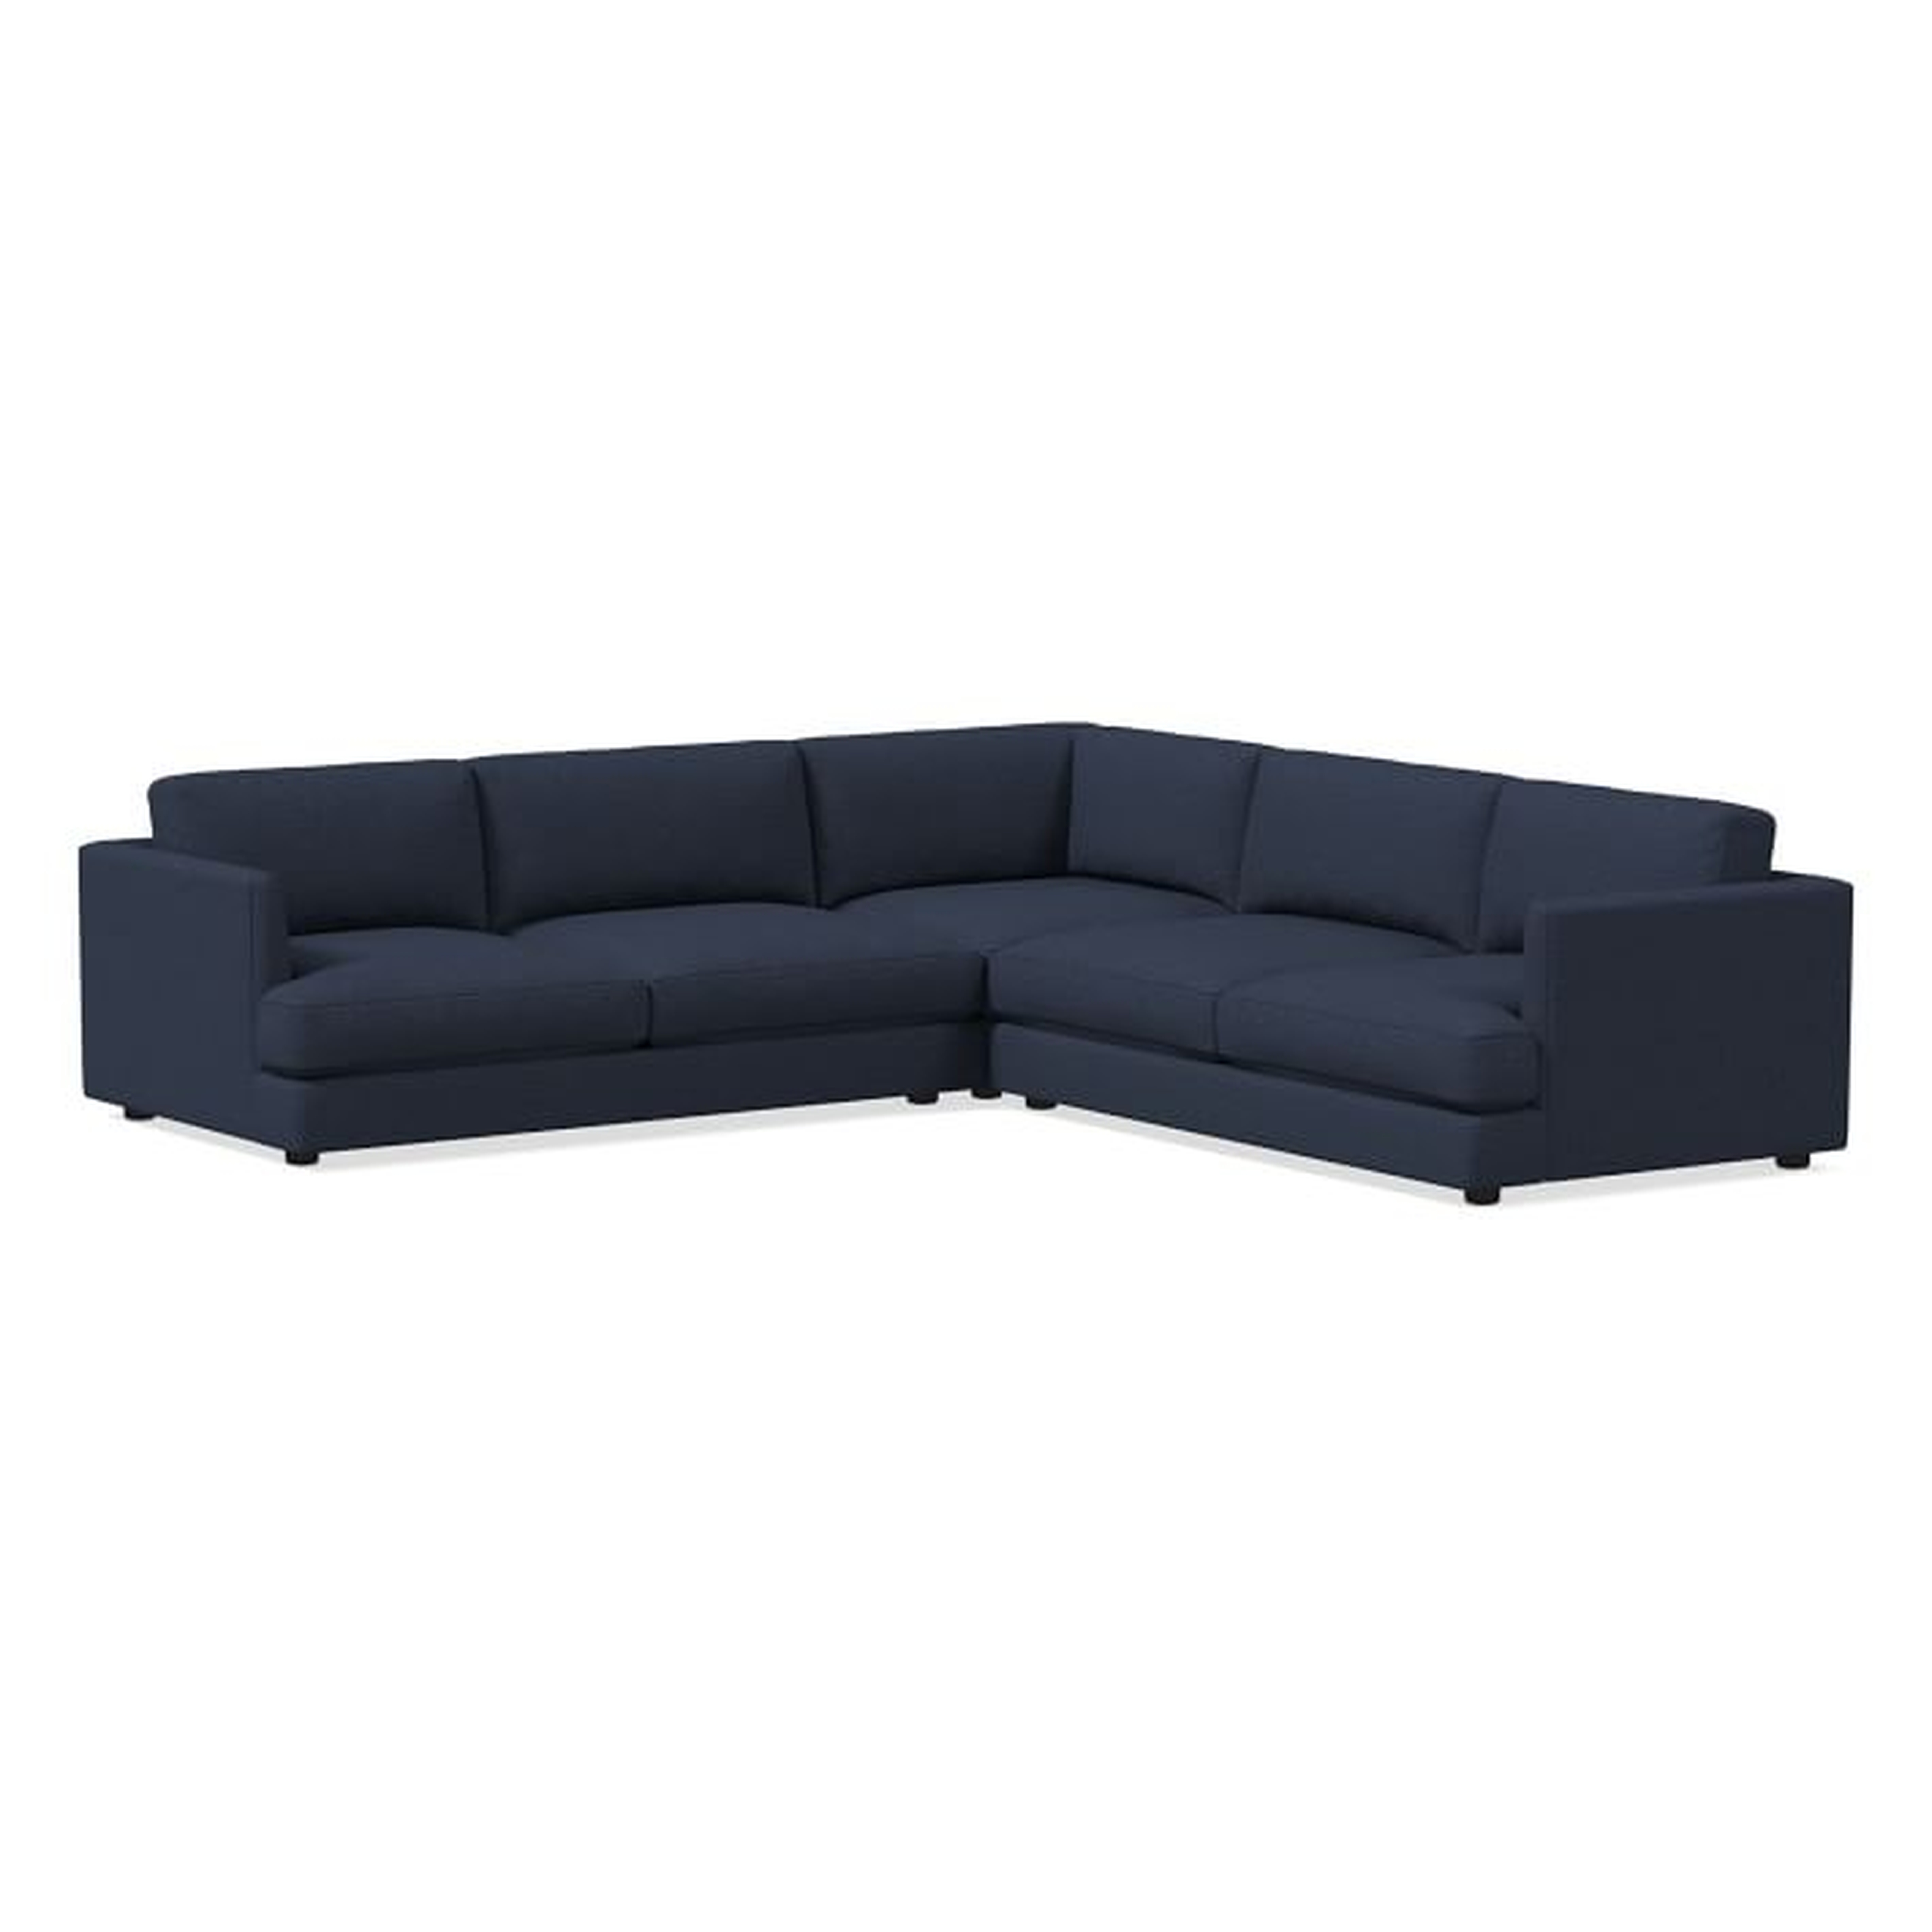 Haven Sectional Set 03: Left Arm Sofa, Corner, Right Arm Sofa, Chunky Basketweave, Aegean Blue, Concealed Support, Trillium - West Elm